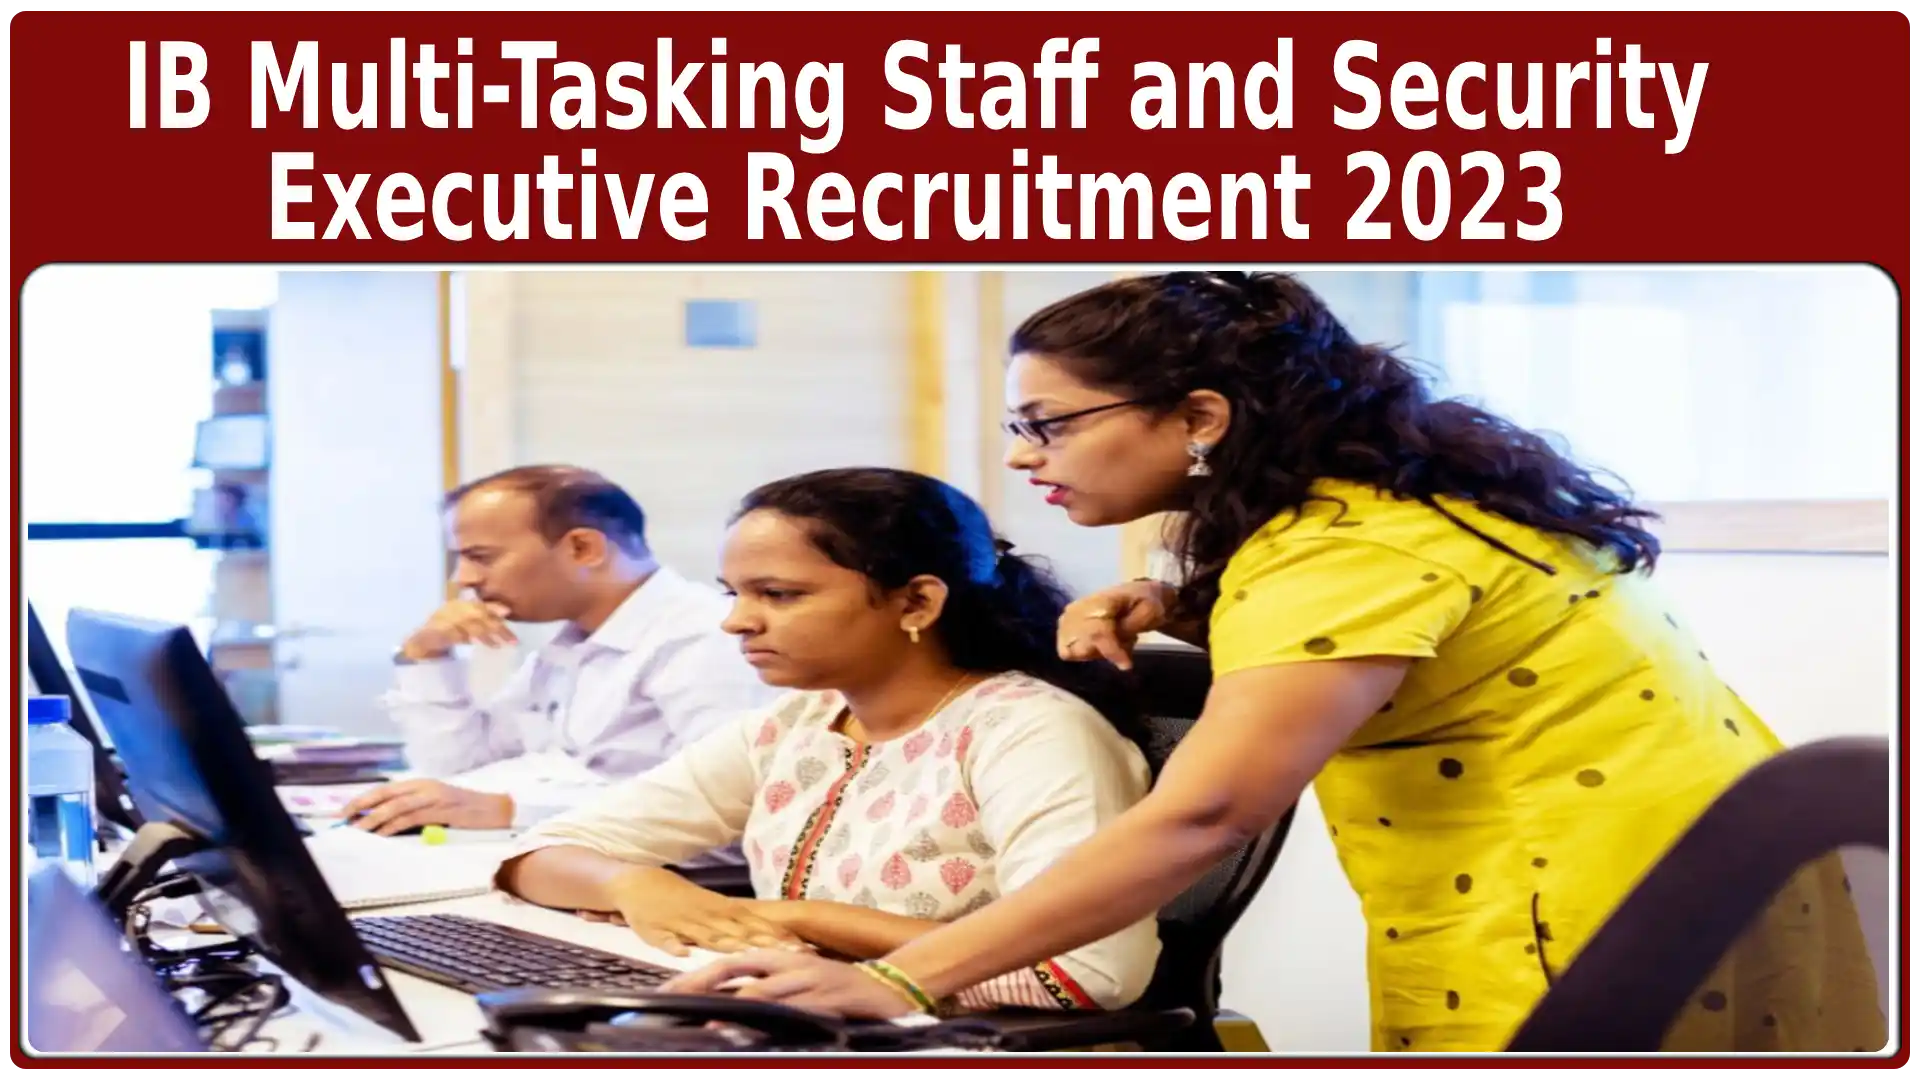 IB Multi-Tasking Staff and Security Executive Recruitment 2023